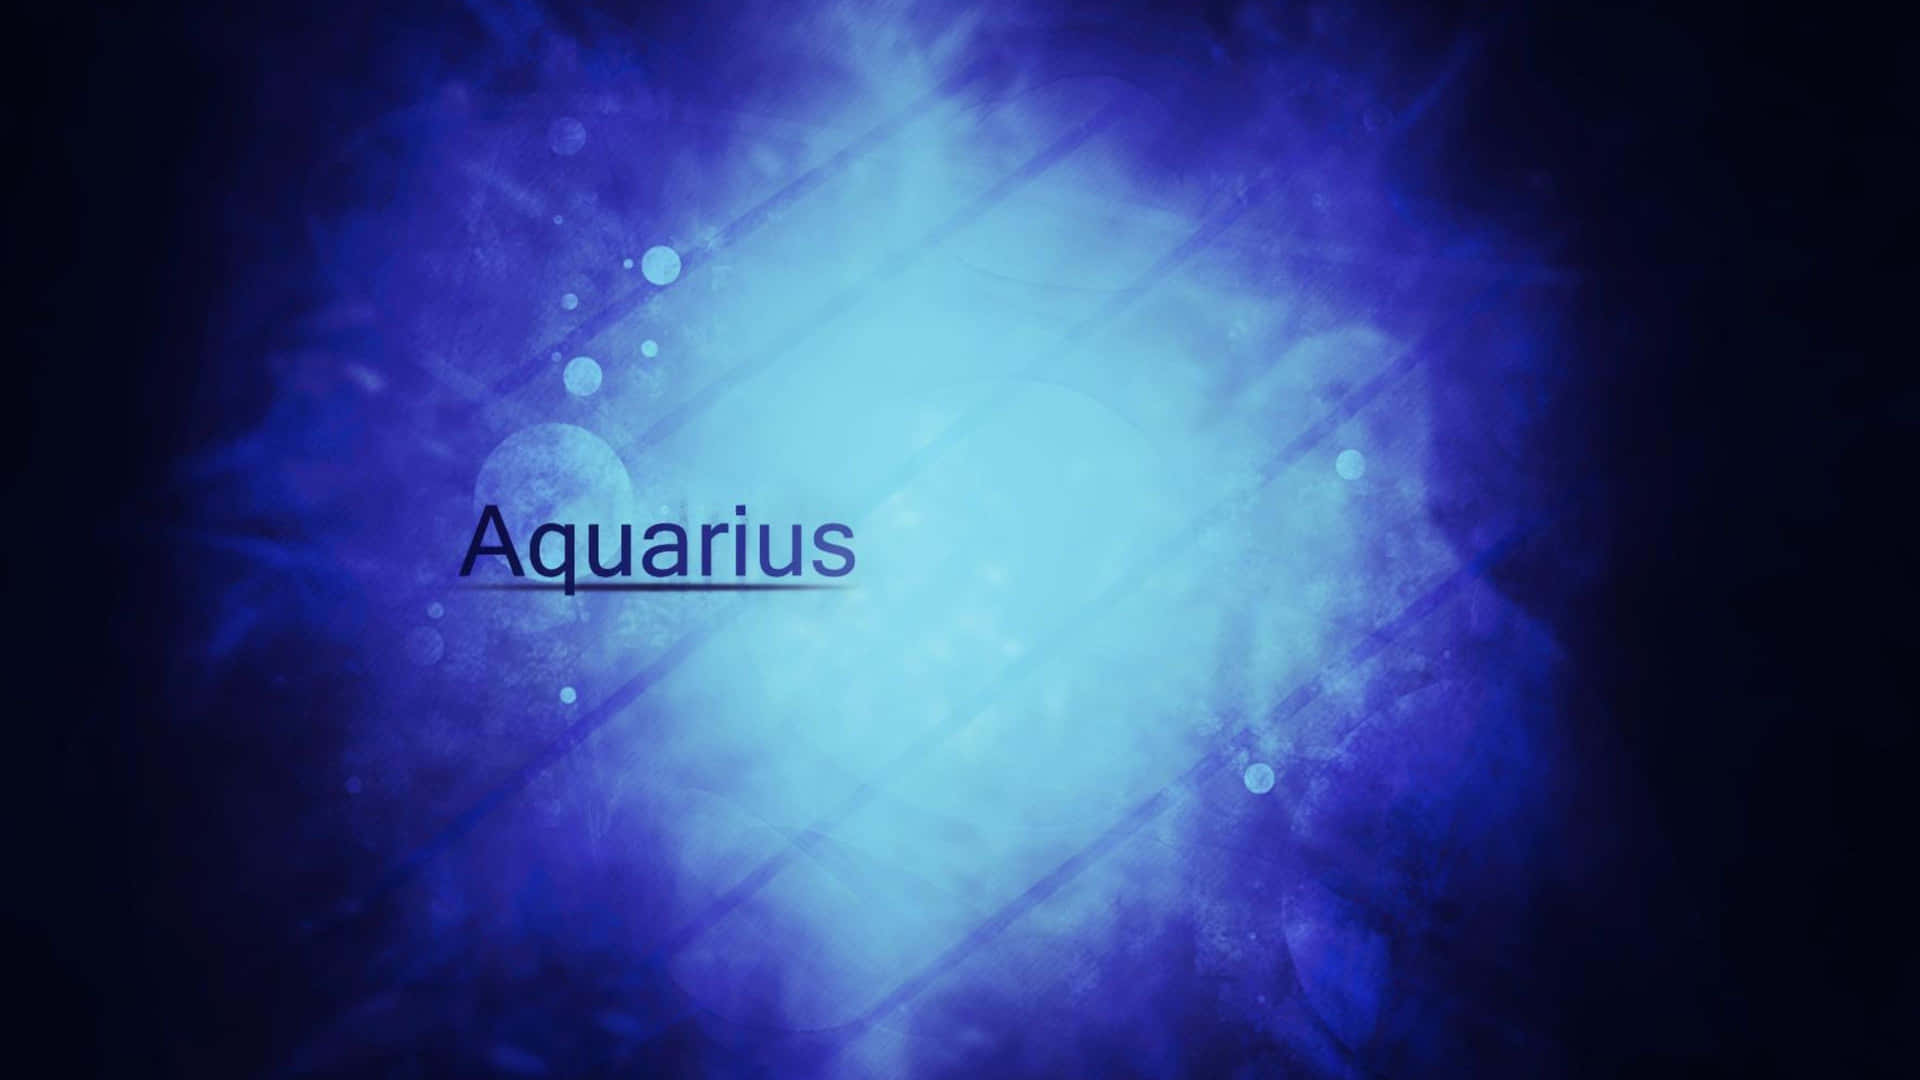 Feel the Force of Aquarius